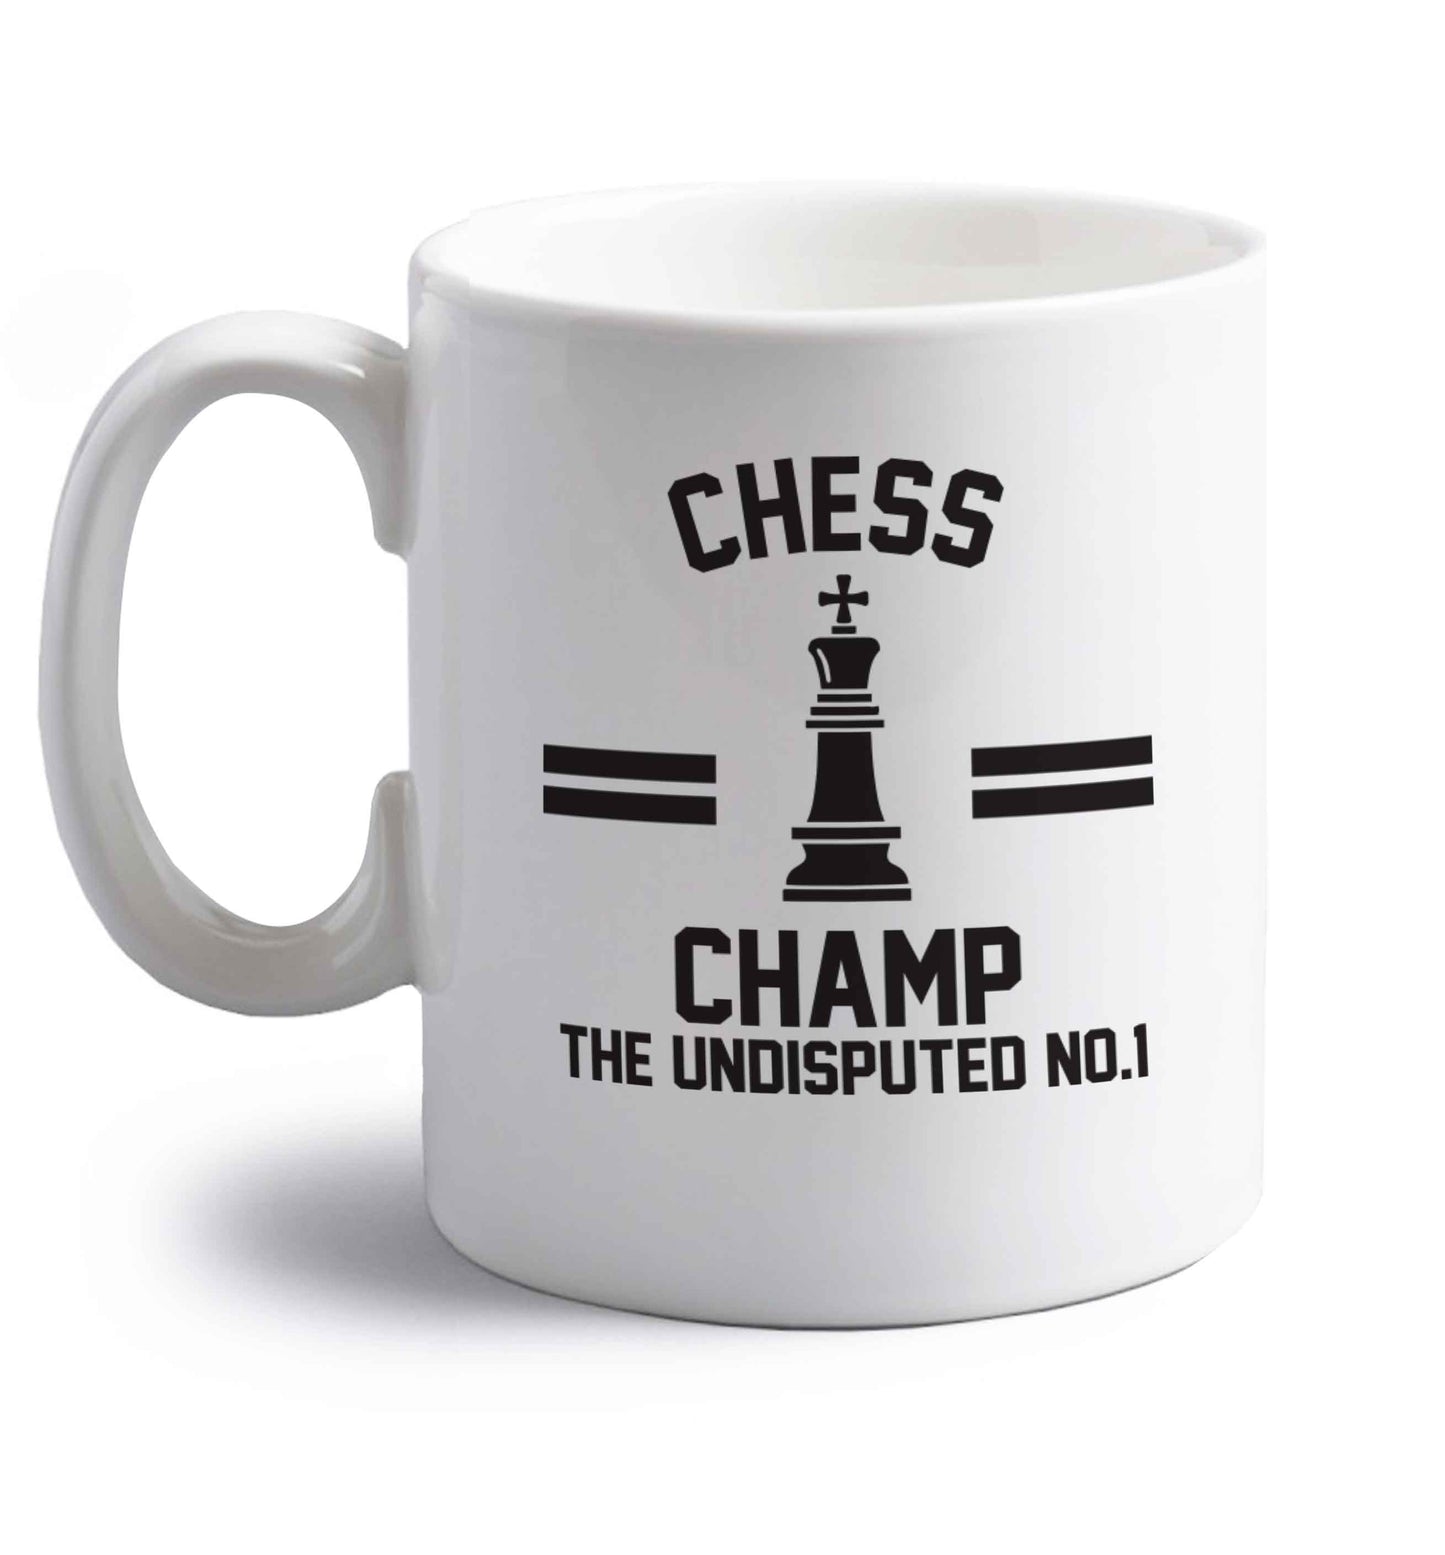 Undisputed chess championship no.1  right handed white ceramic mug 